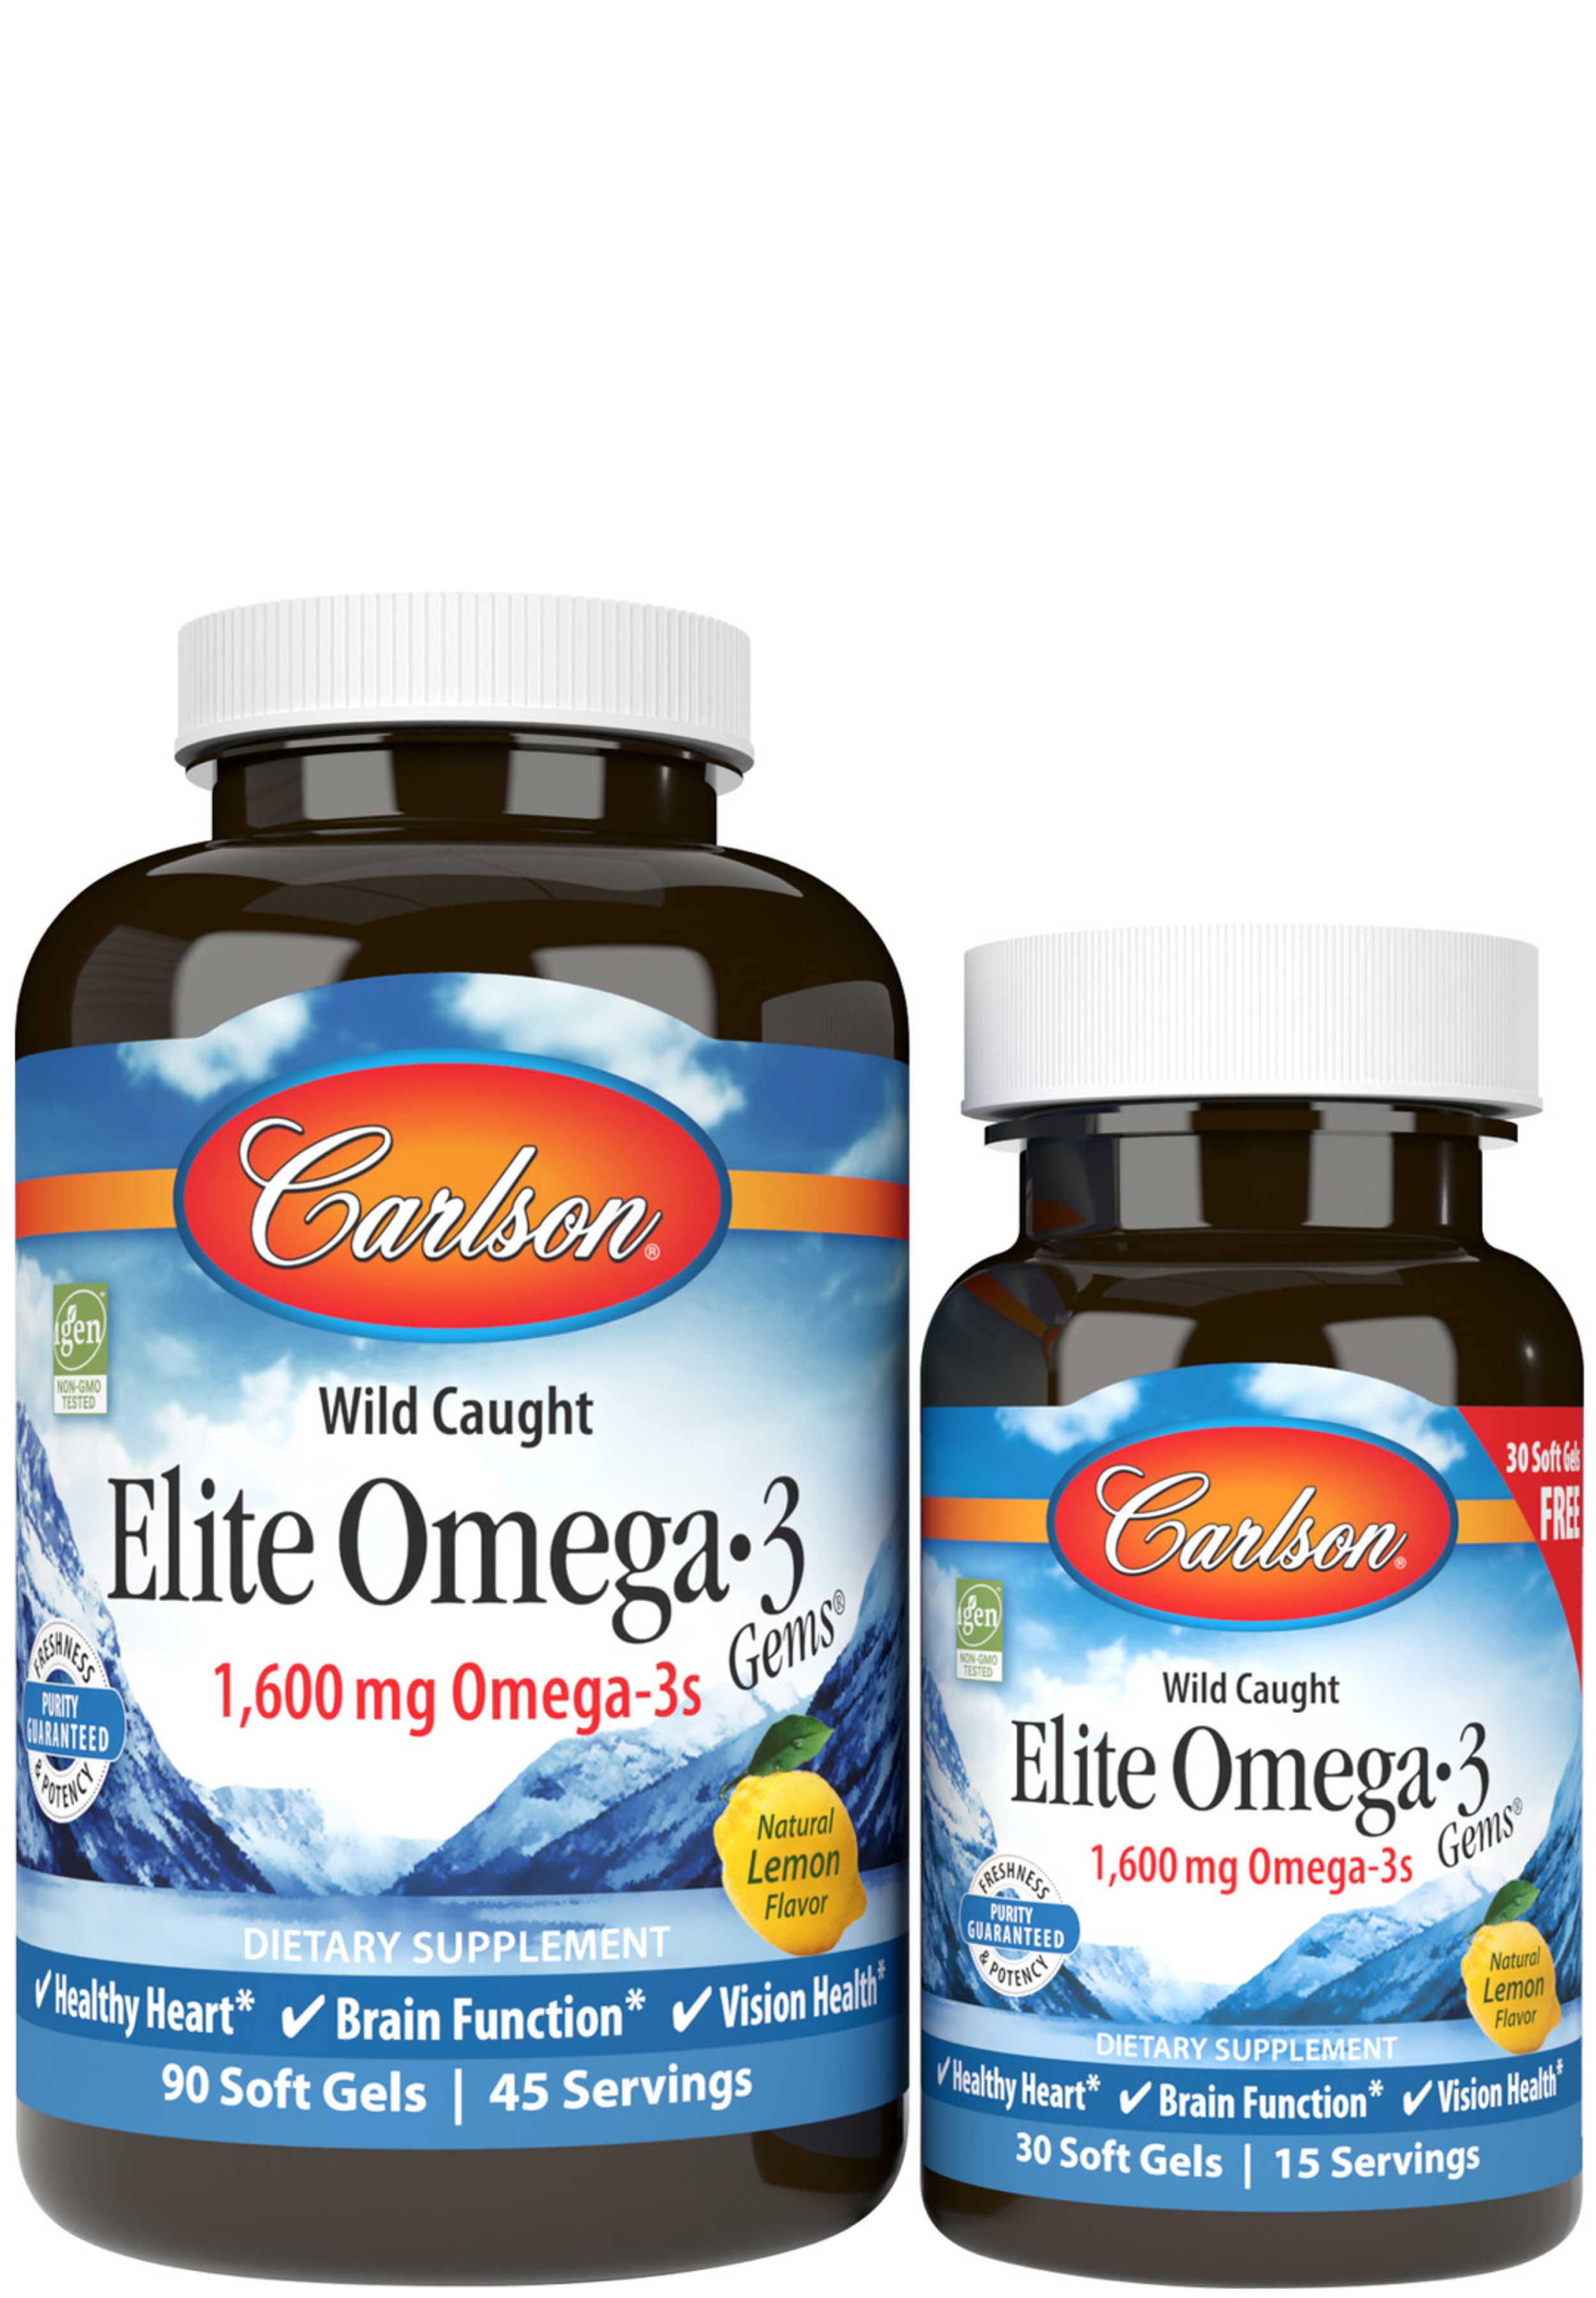 Carlson Labs Elite Omega-3 Gems 1,600 mg Omega-3s